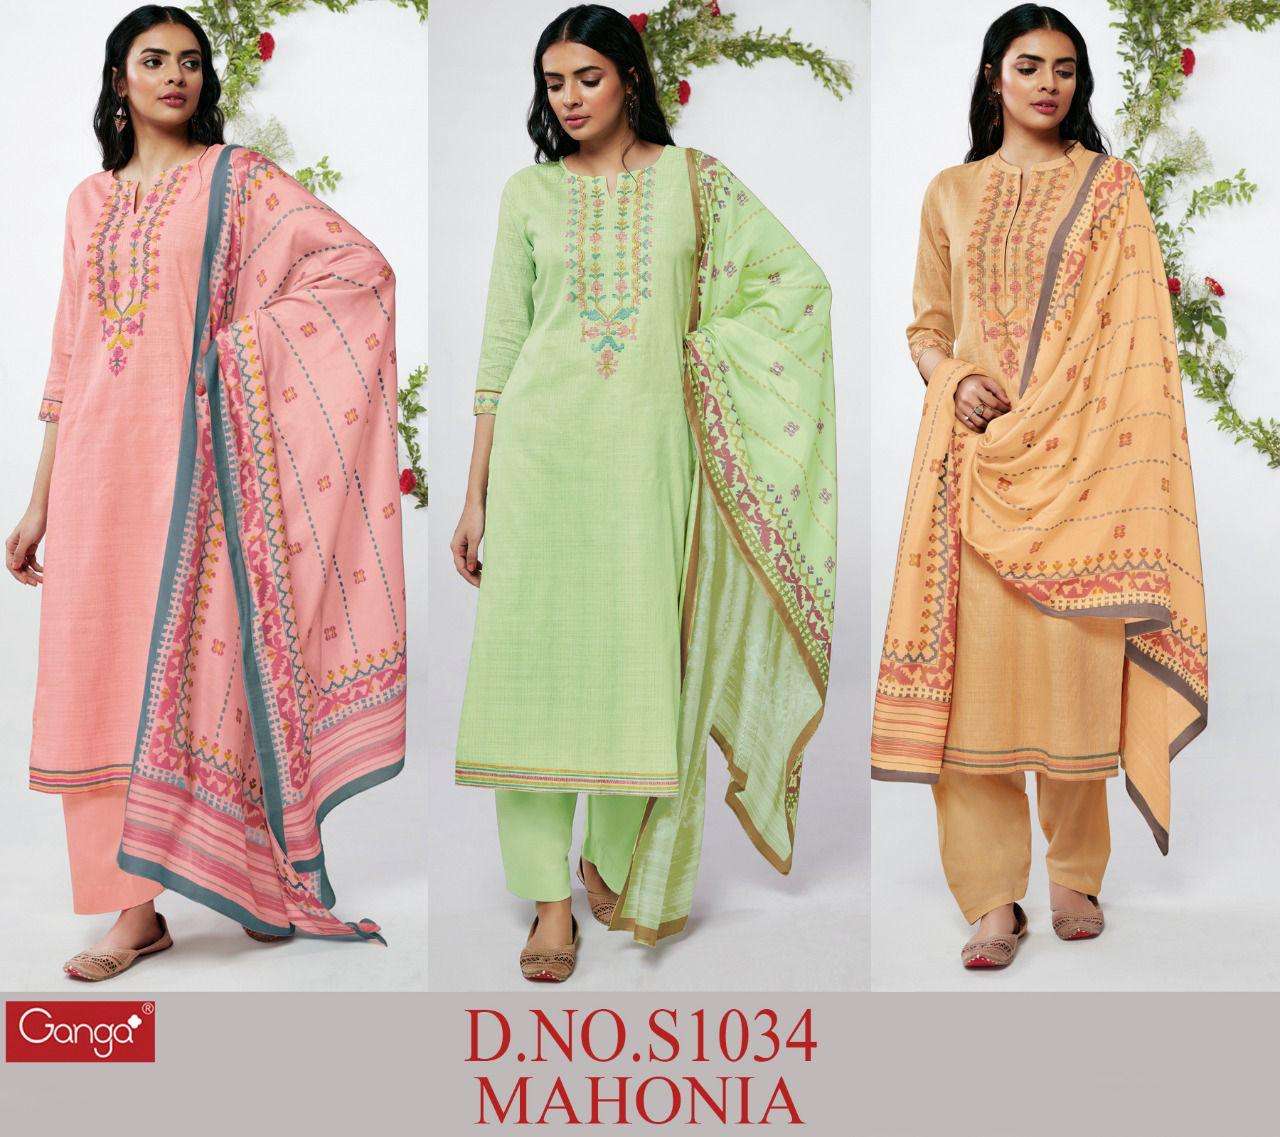 ganga mahonia 1034 premium woven cotton fancy salwar kameez catalogue wholesale price surat